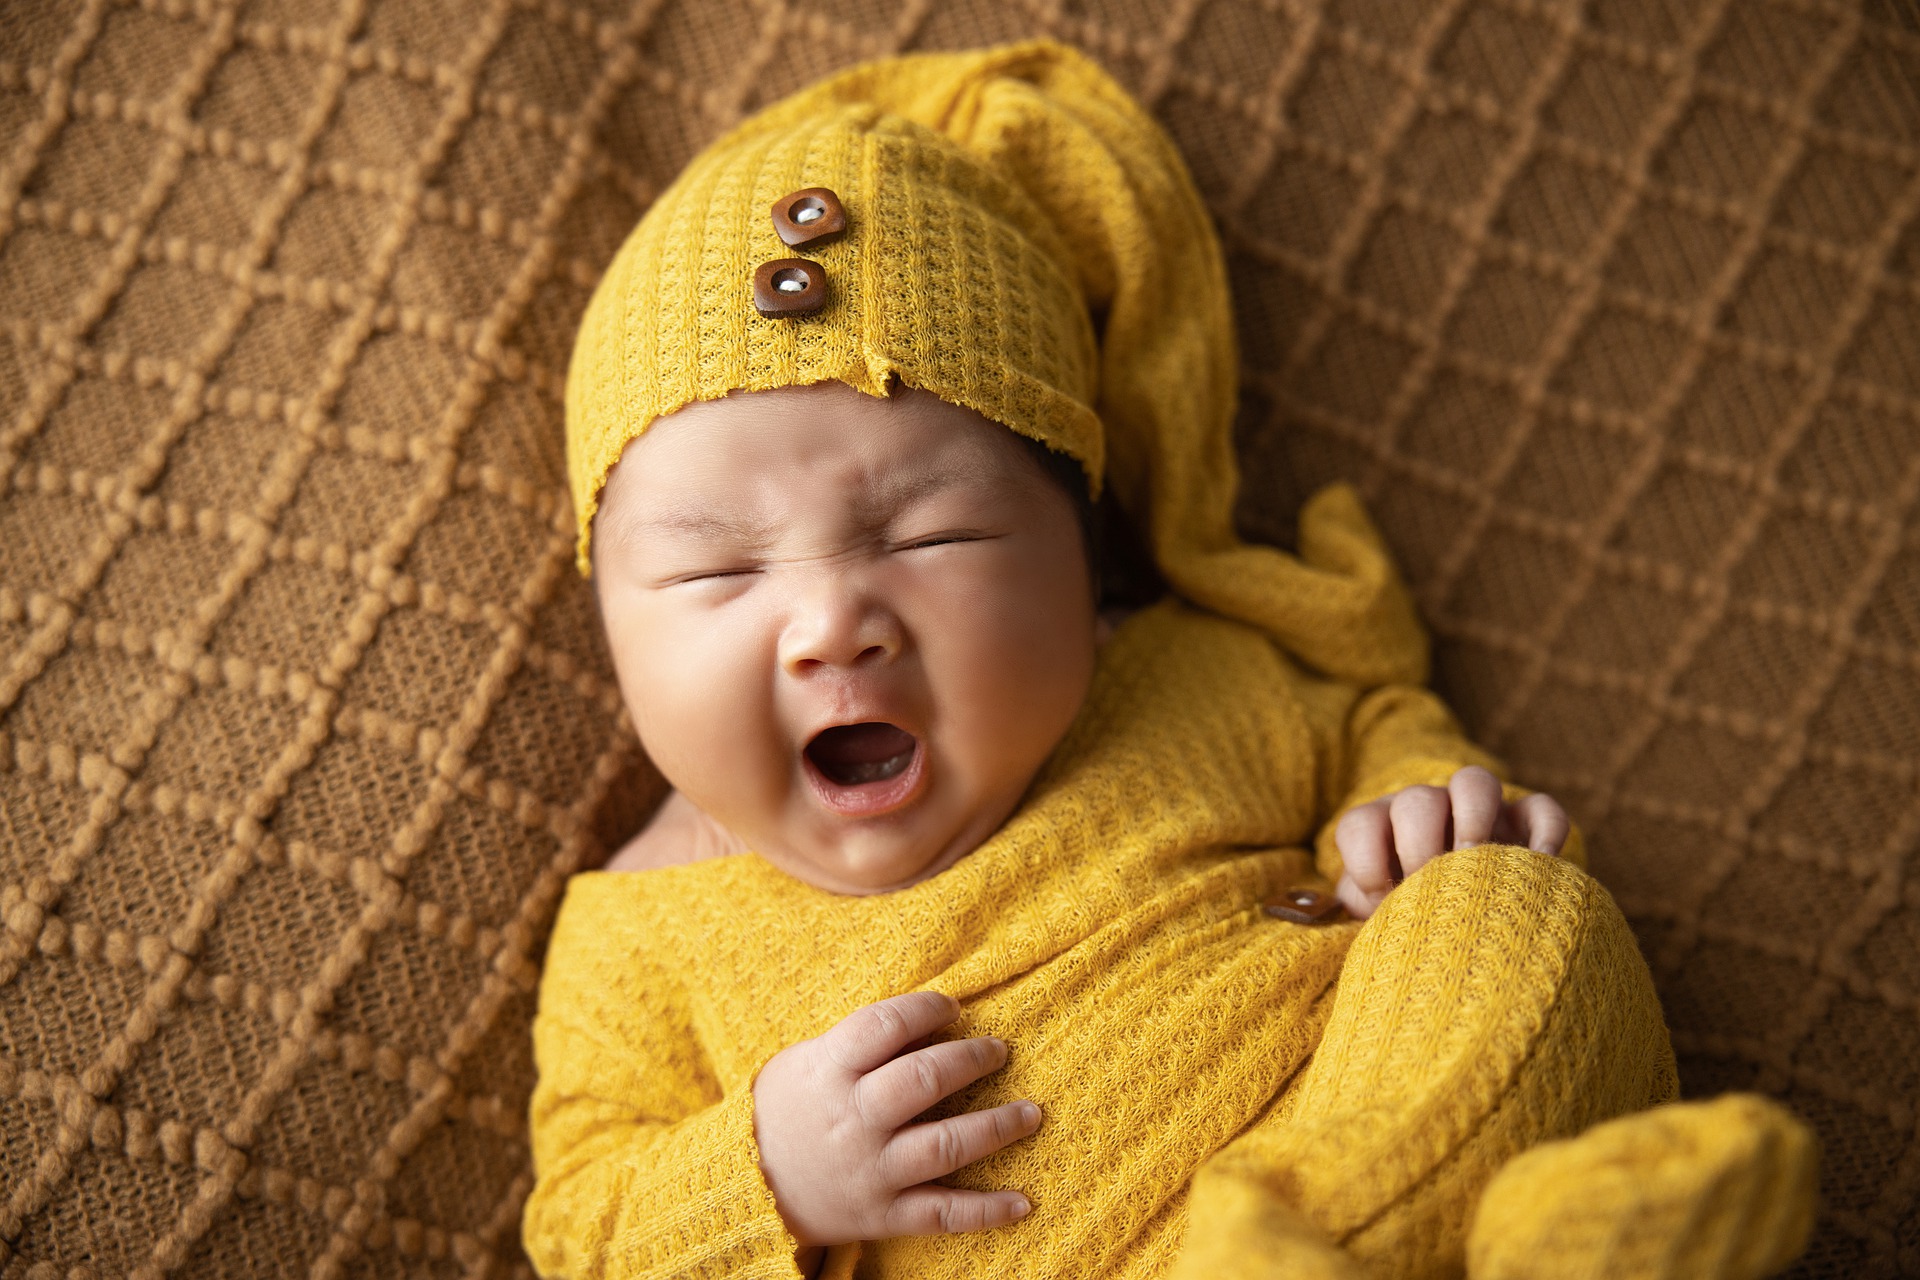 Why Do Babies Cry In Their Sleep?